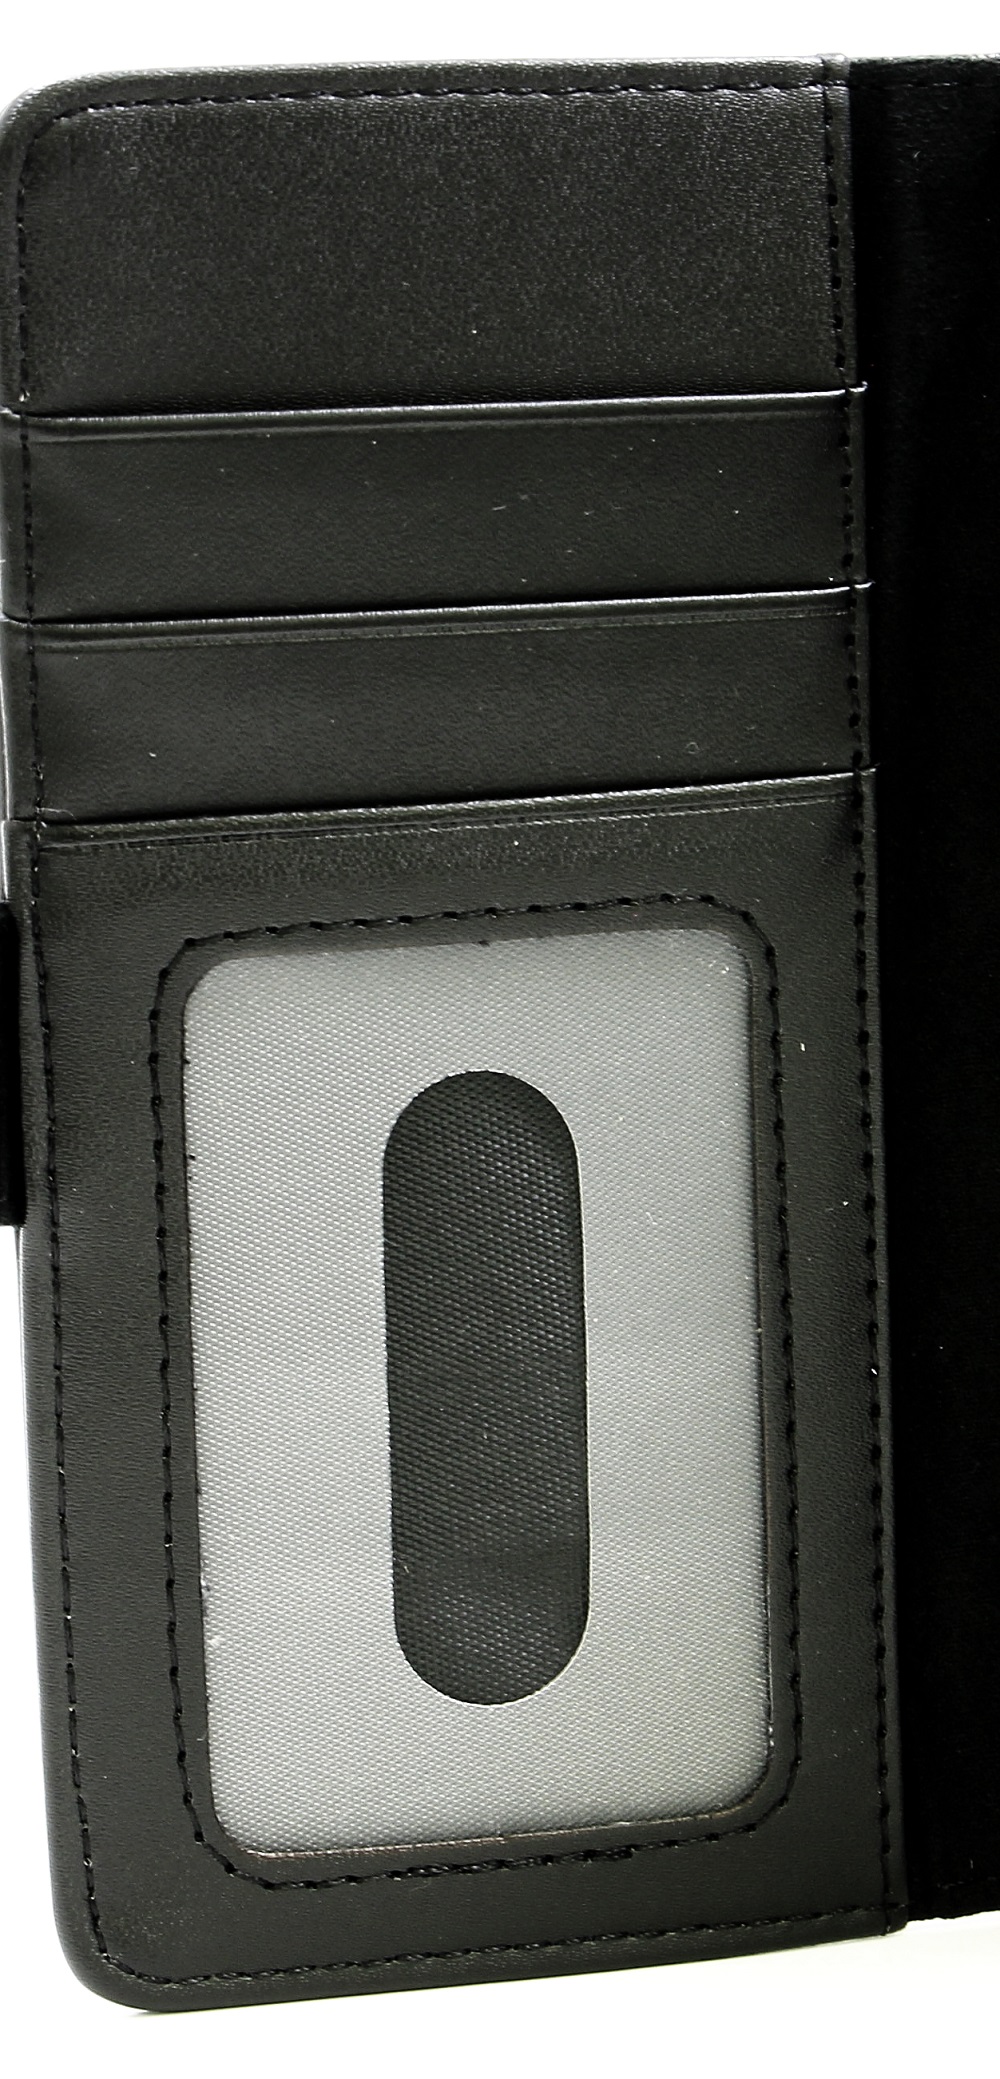 Skimblocker Lommebok-etui Sony Xperia X Performance (F8131)